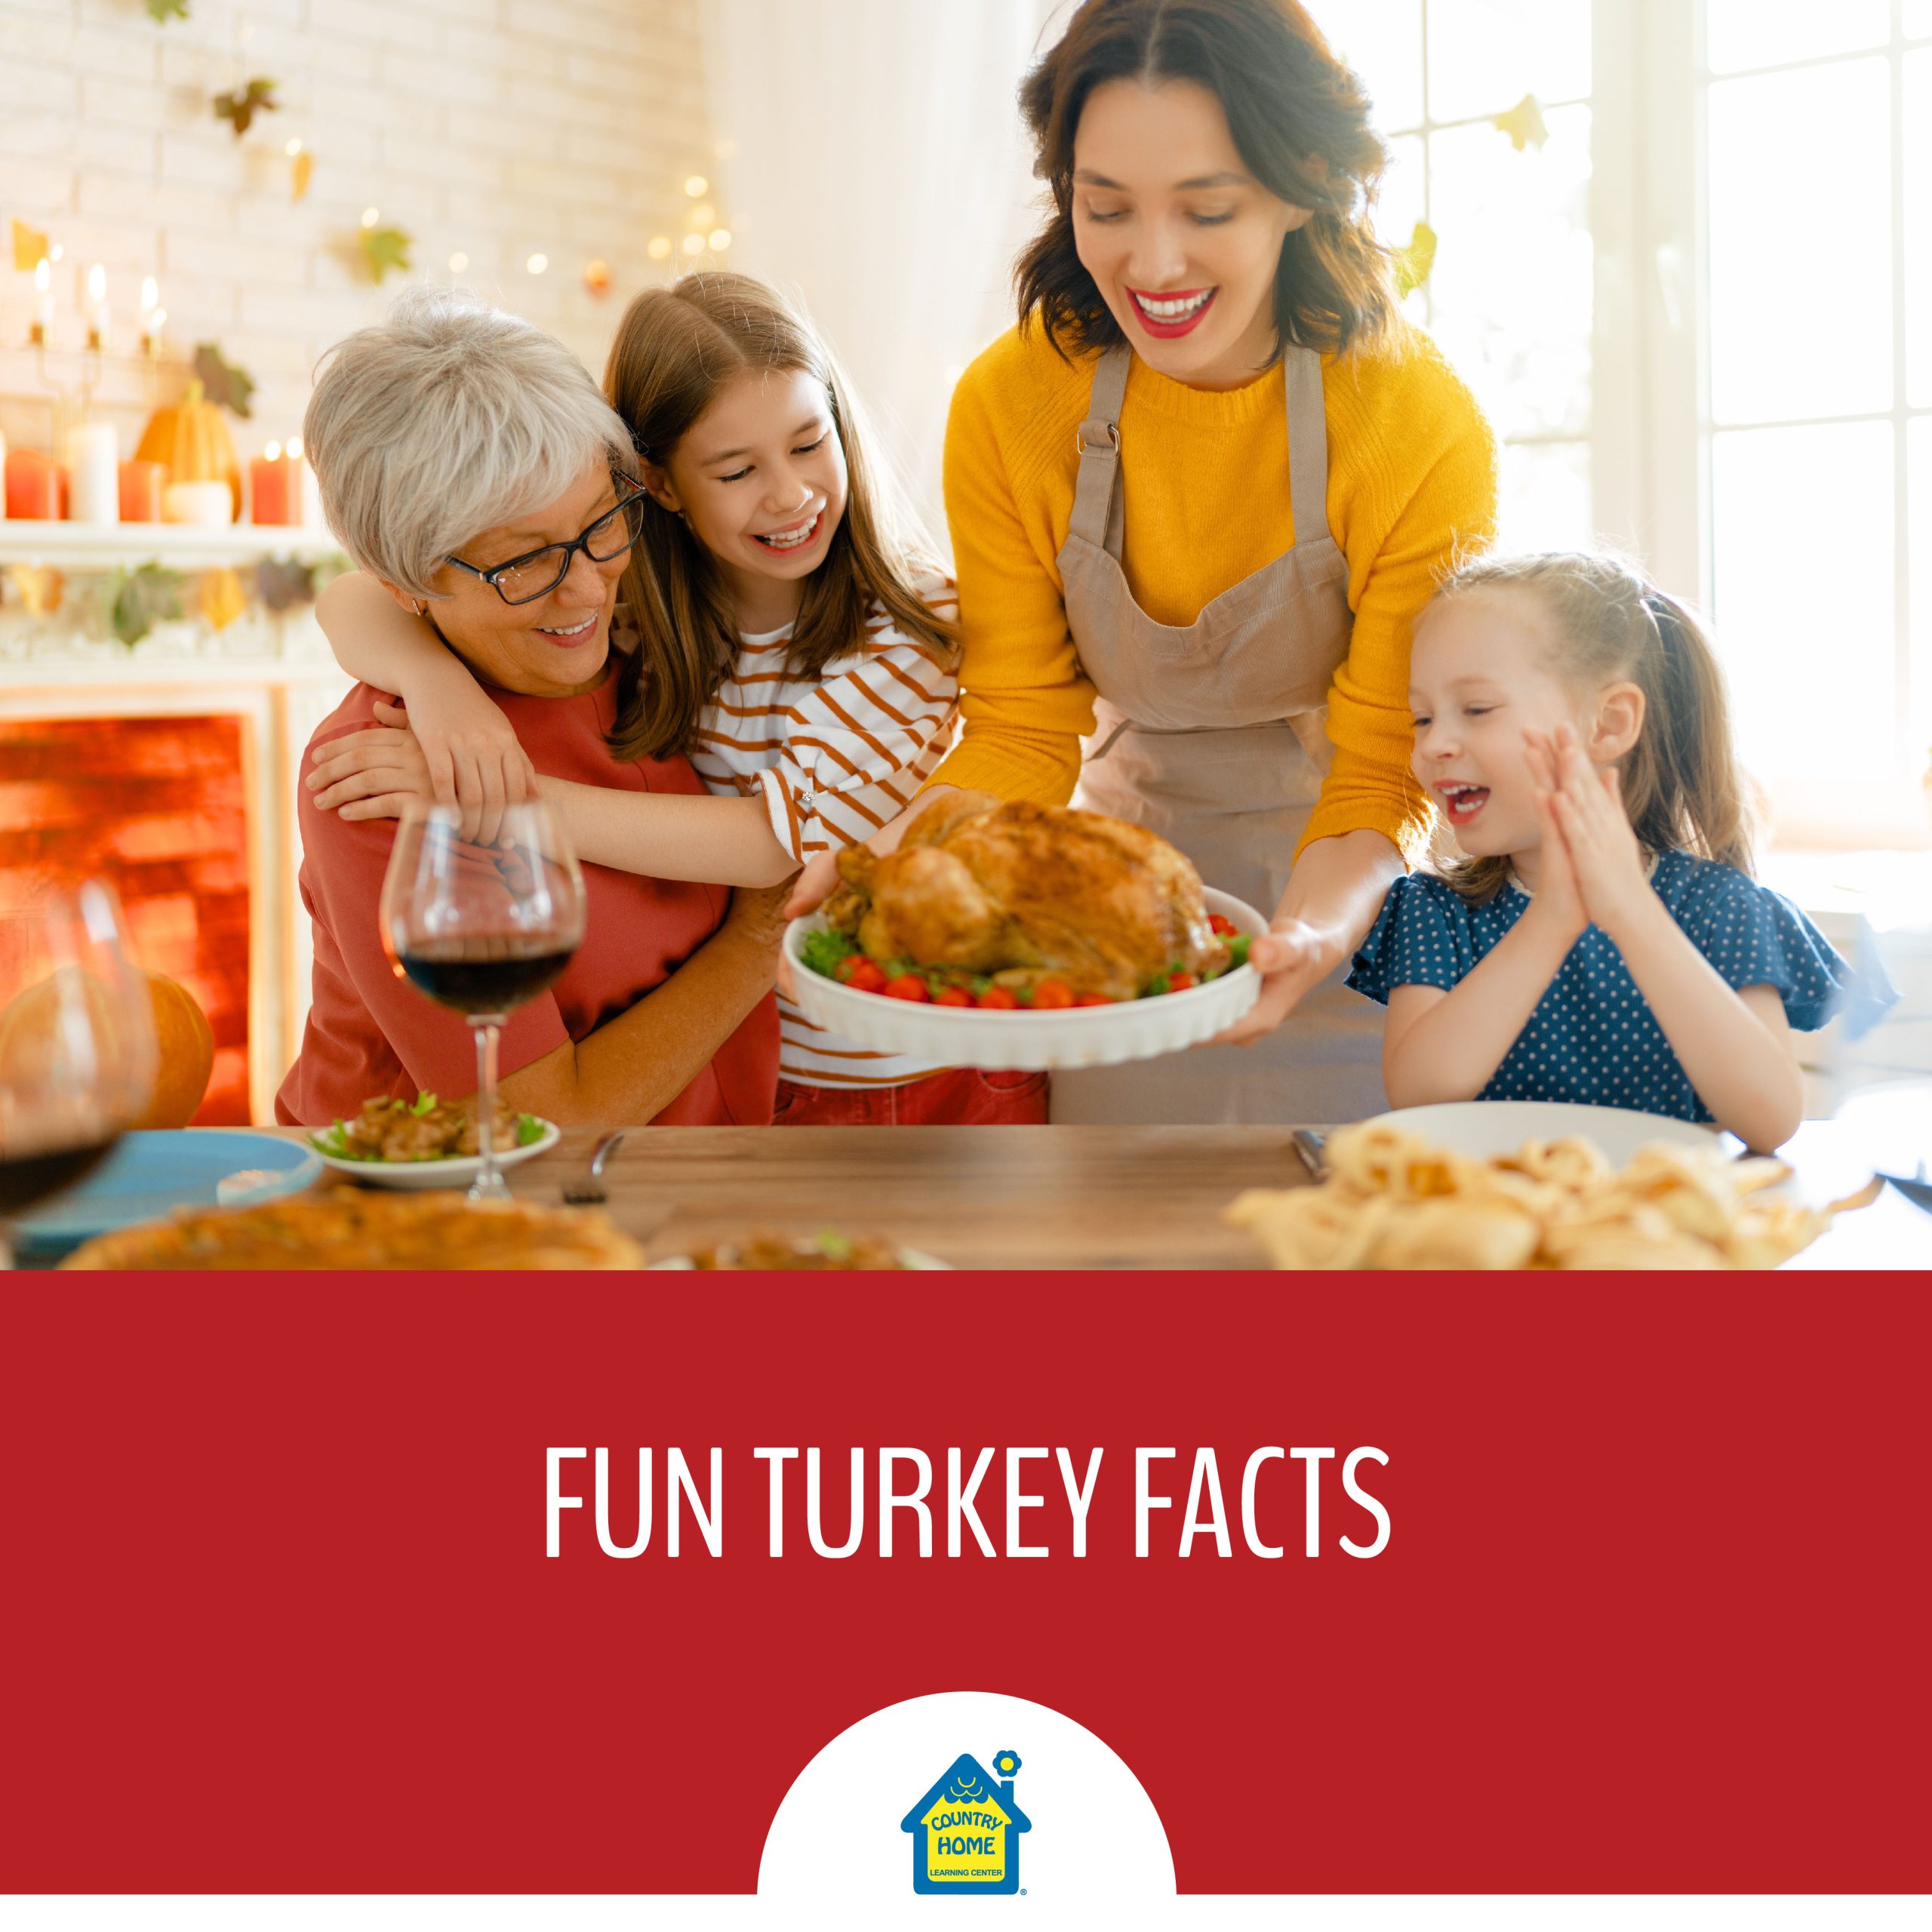 Fun Turkey Facts